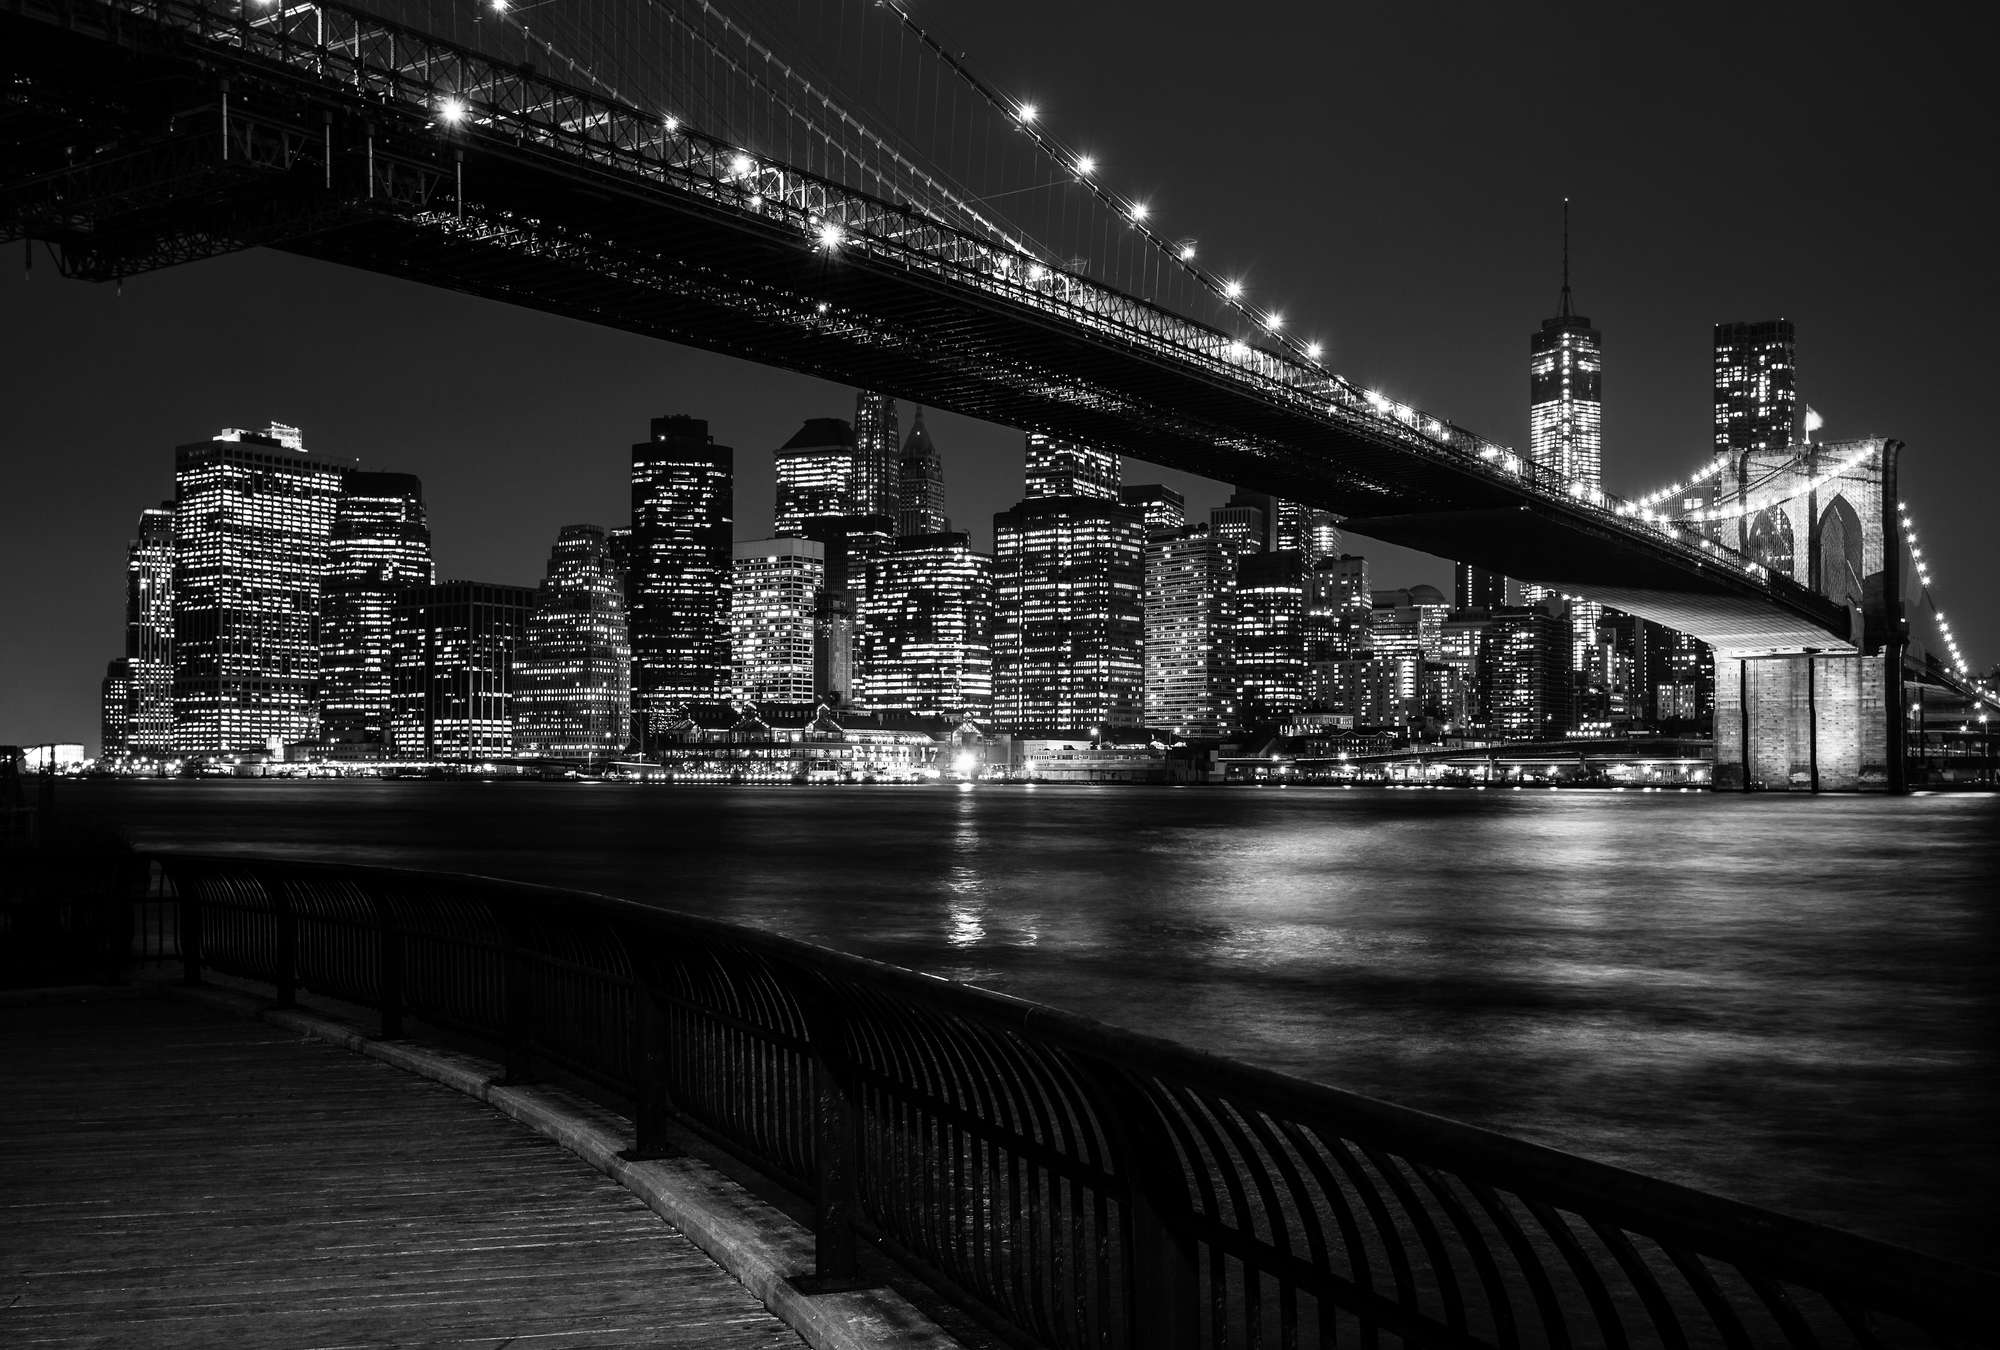             Brooklyn Bridge muurschildering bij nacht - zwart-wit
        